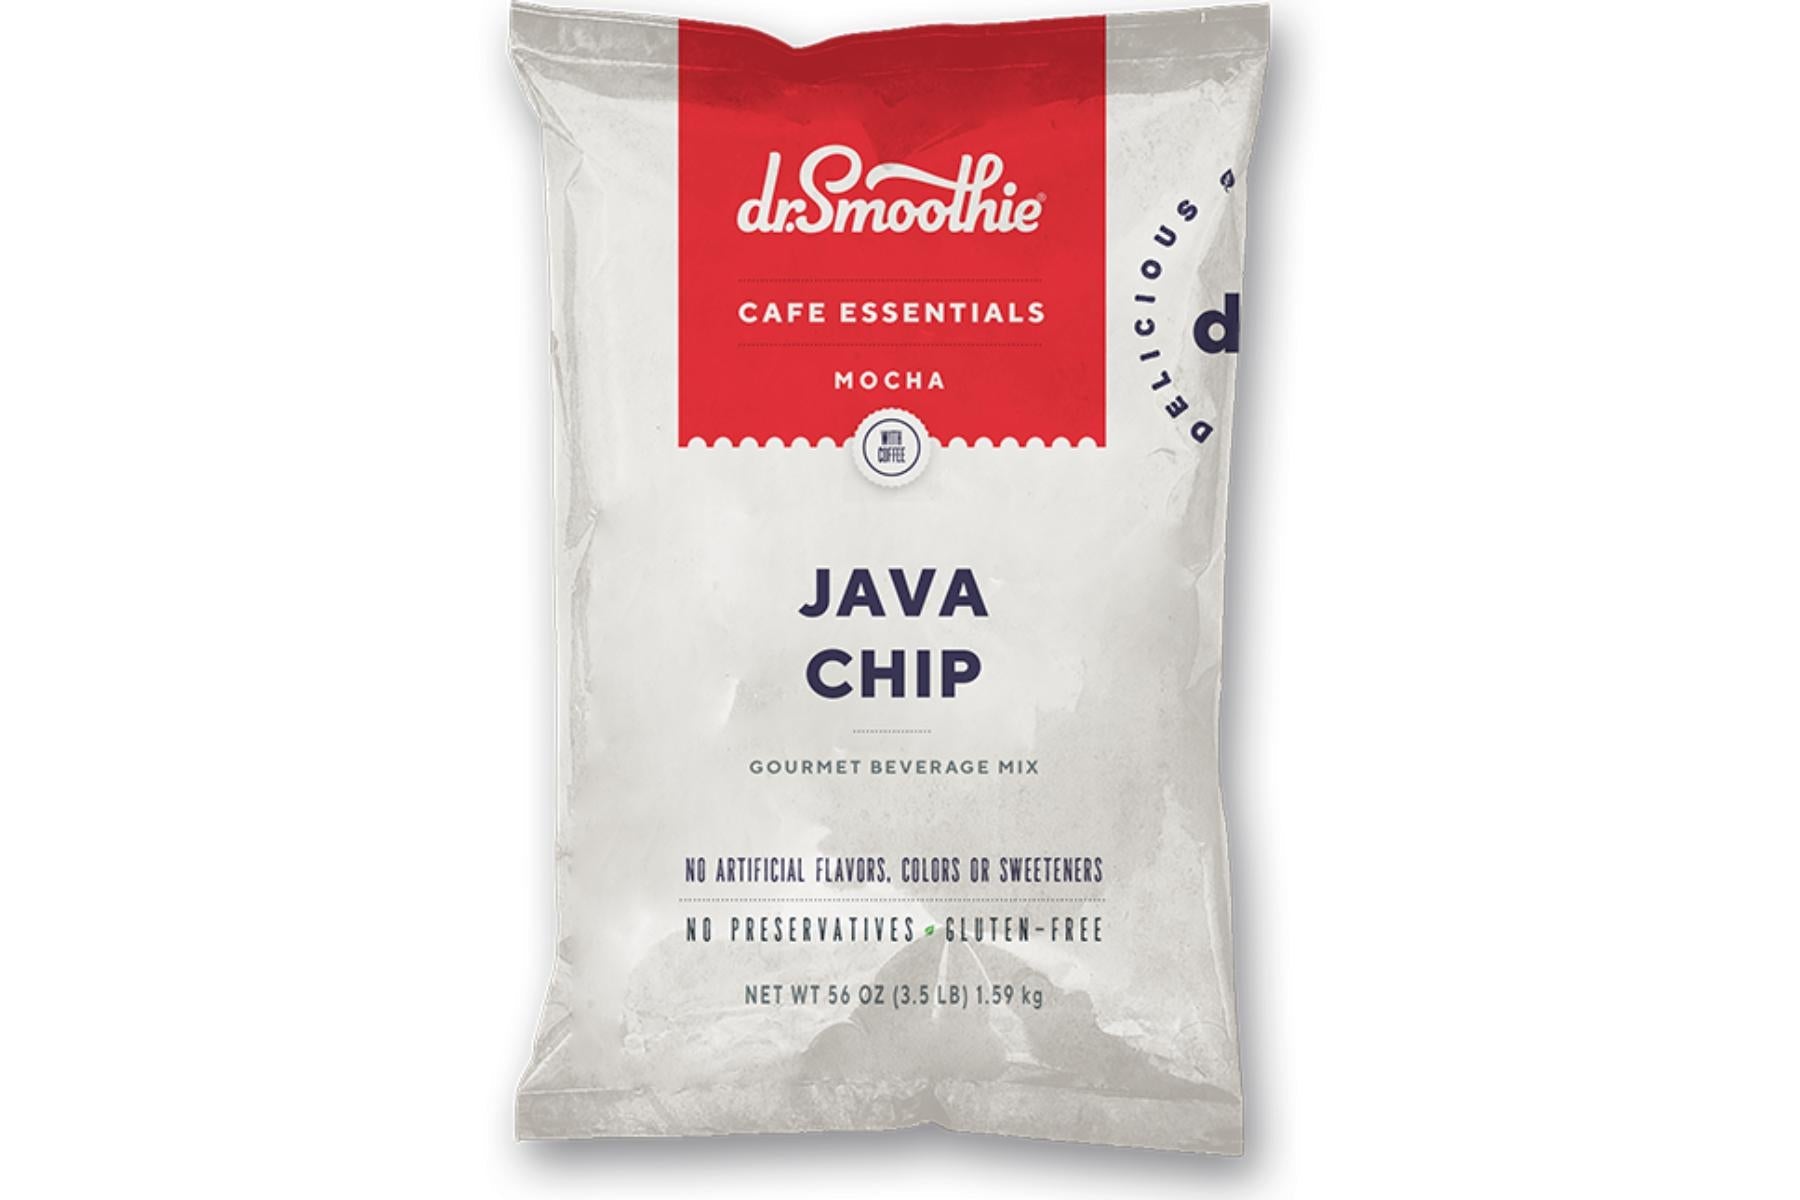 Dr. Smoothie Cafe Essentials Mocha - 3.5lb Bulk Bag: Java Chip